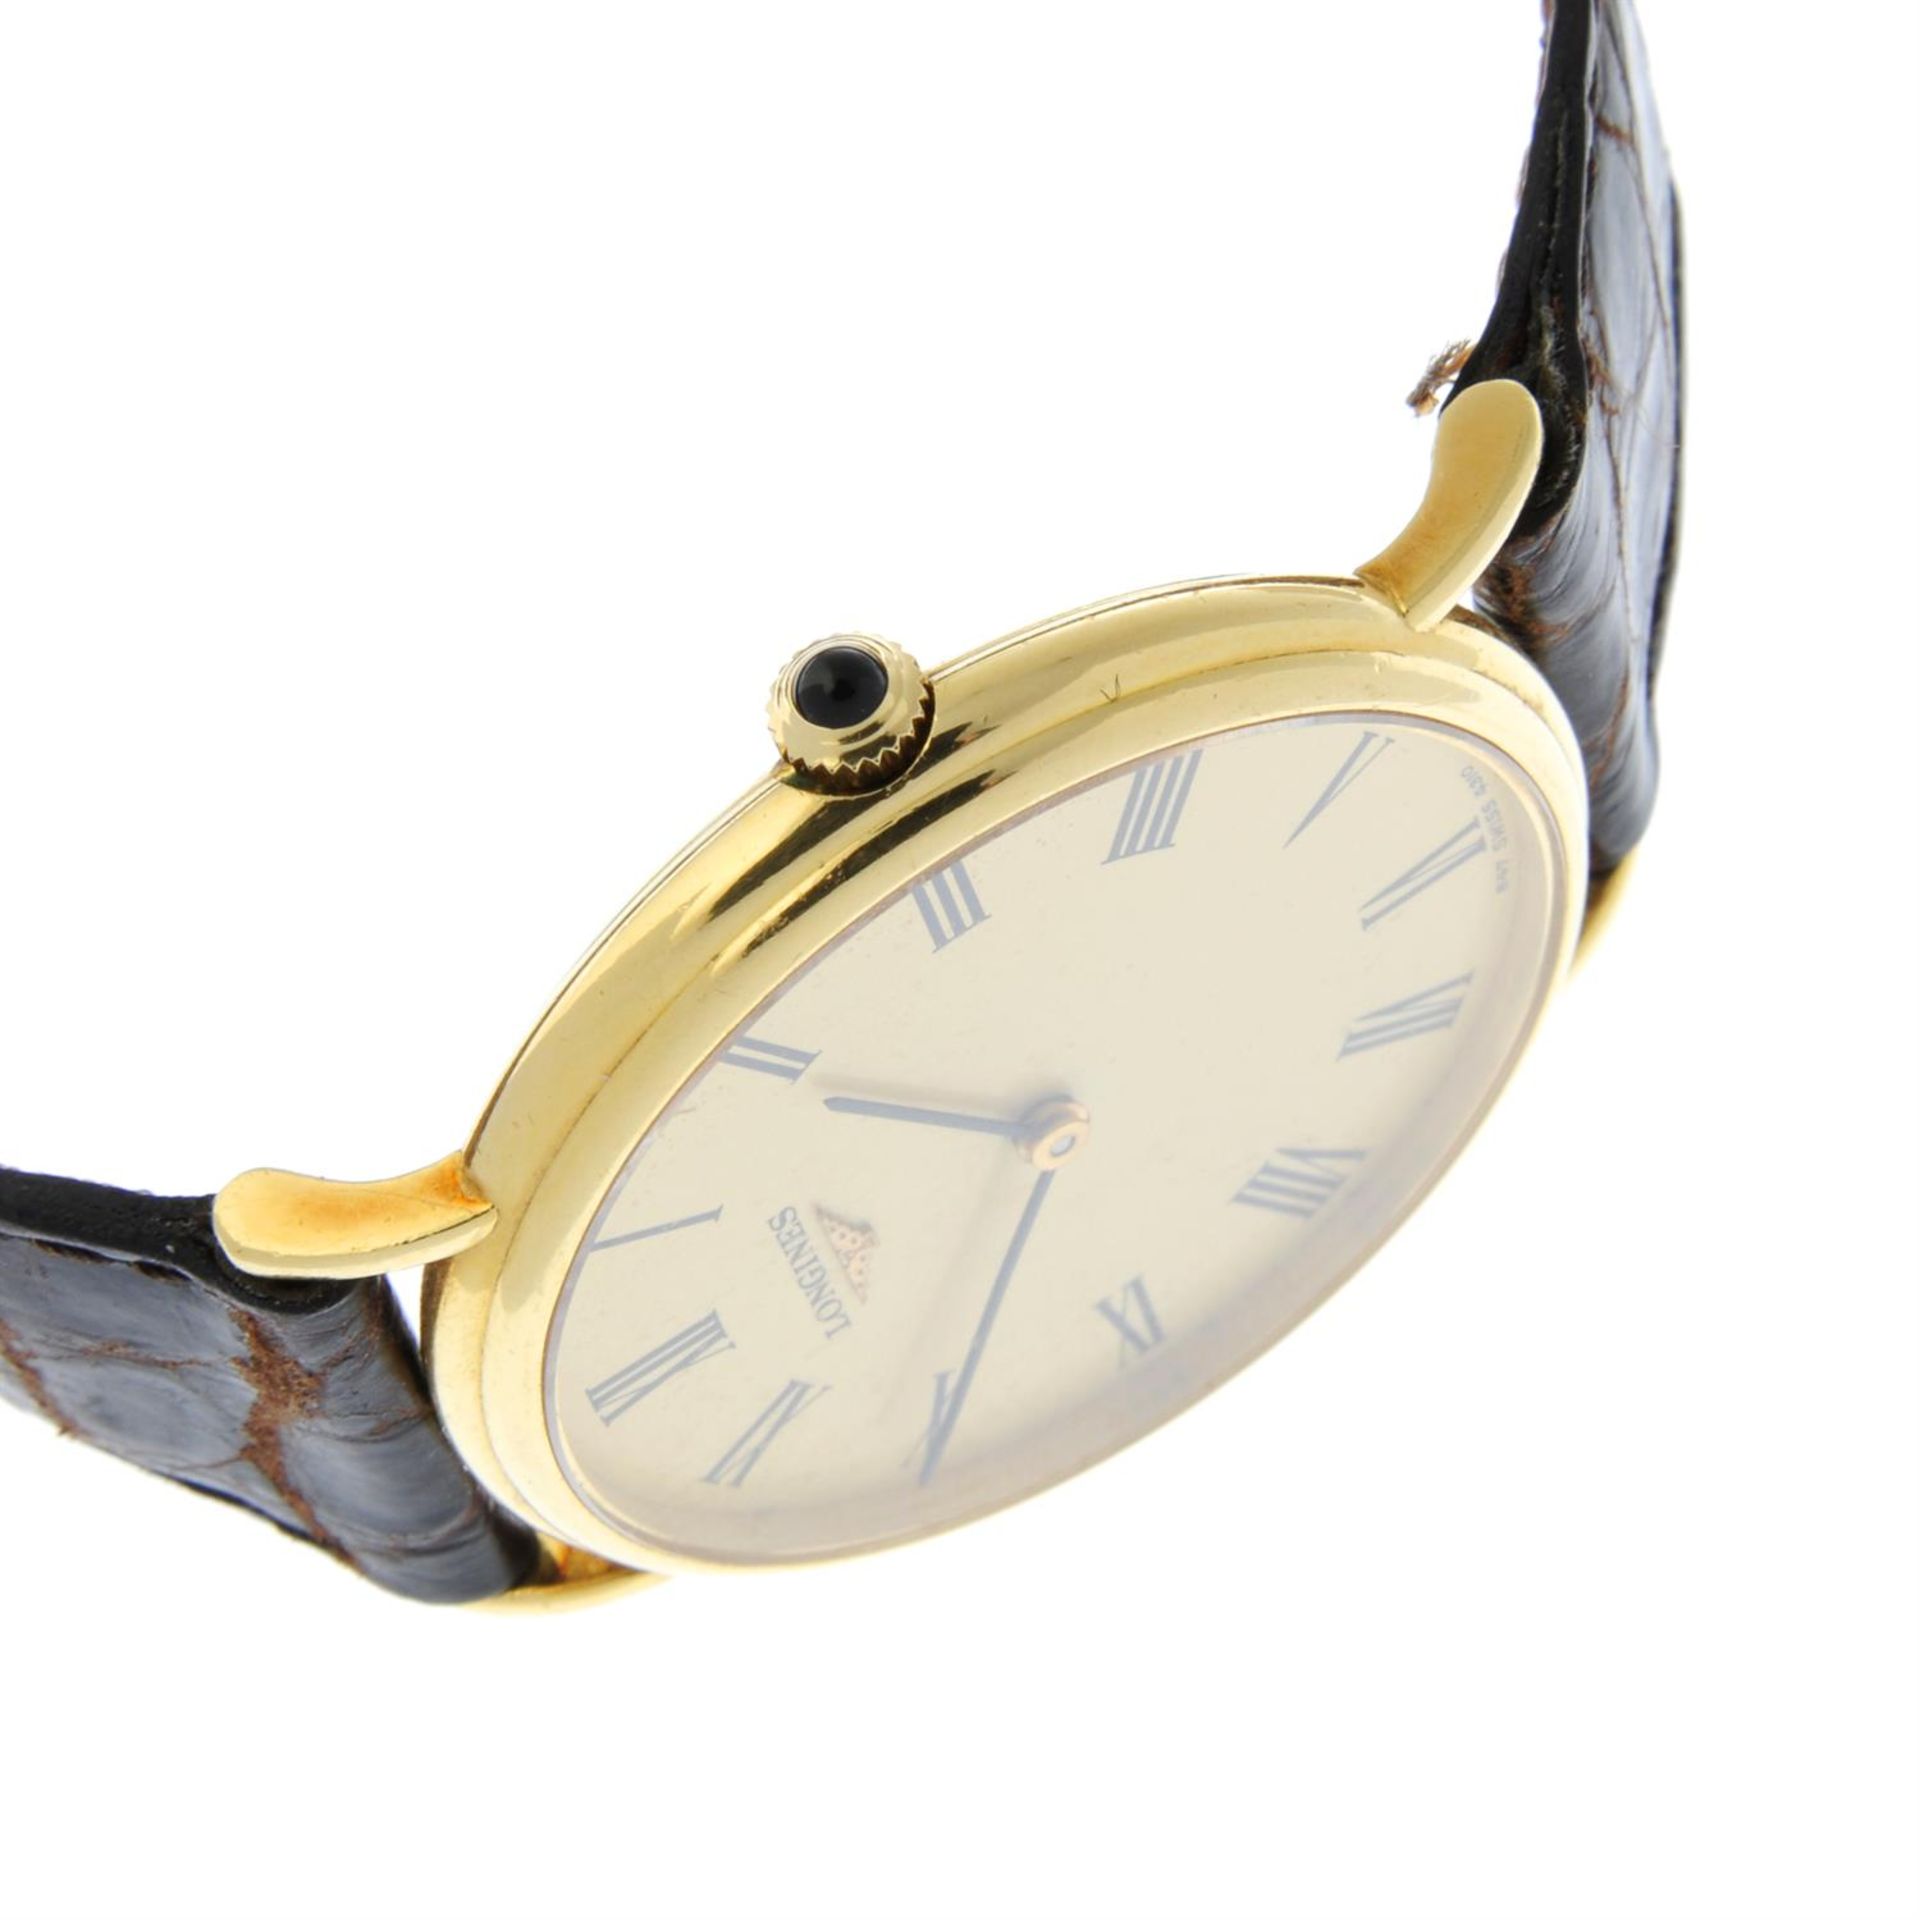 LONGINES - a yellow metal wrist watch, 34mm. - Image 3 of 4